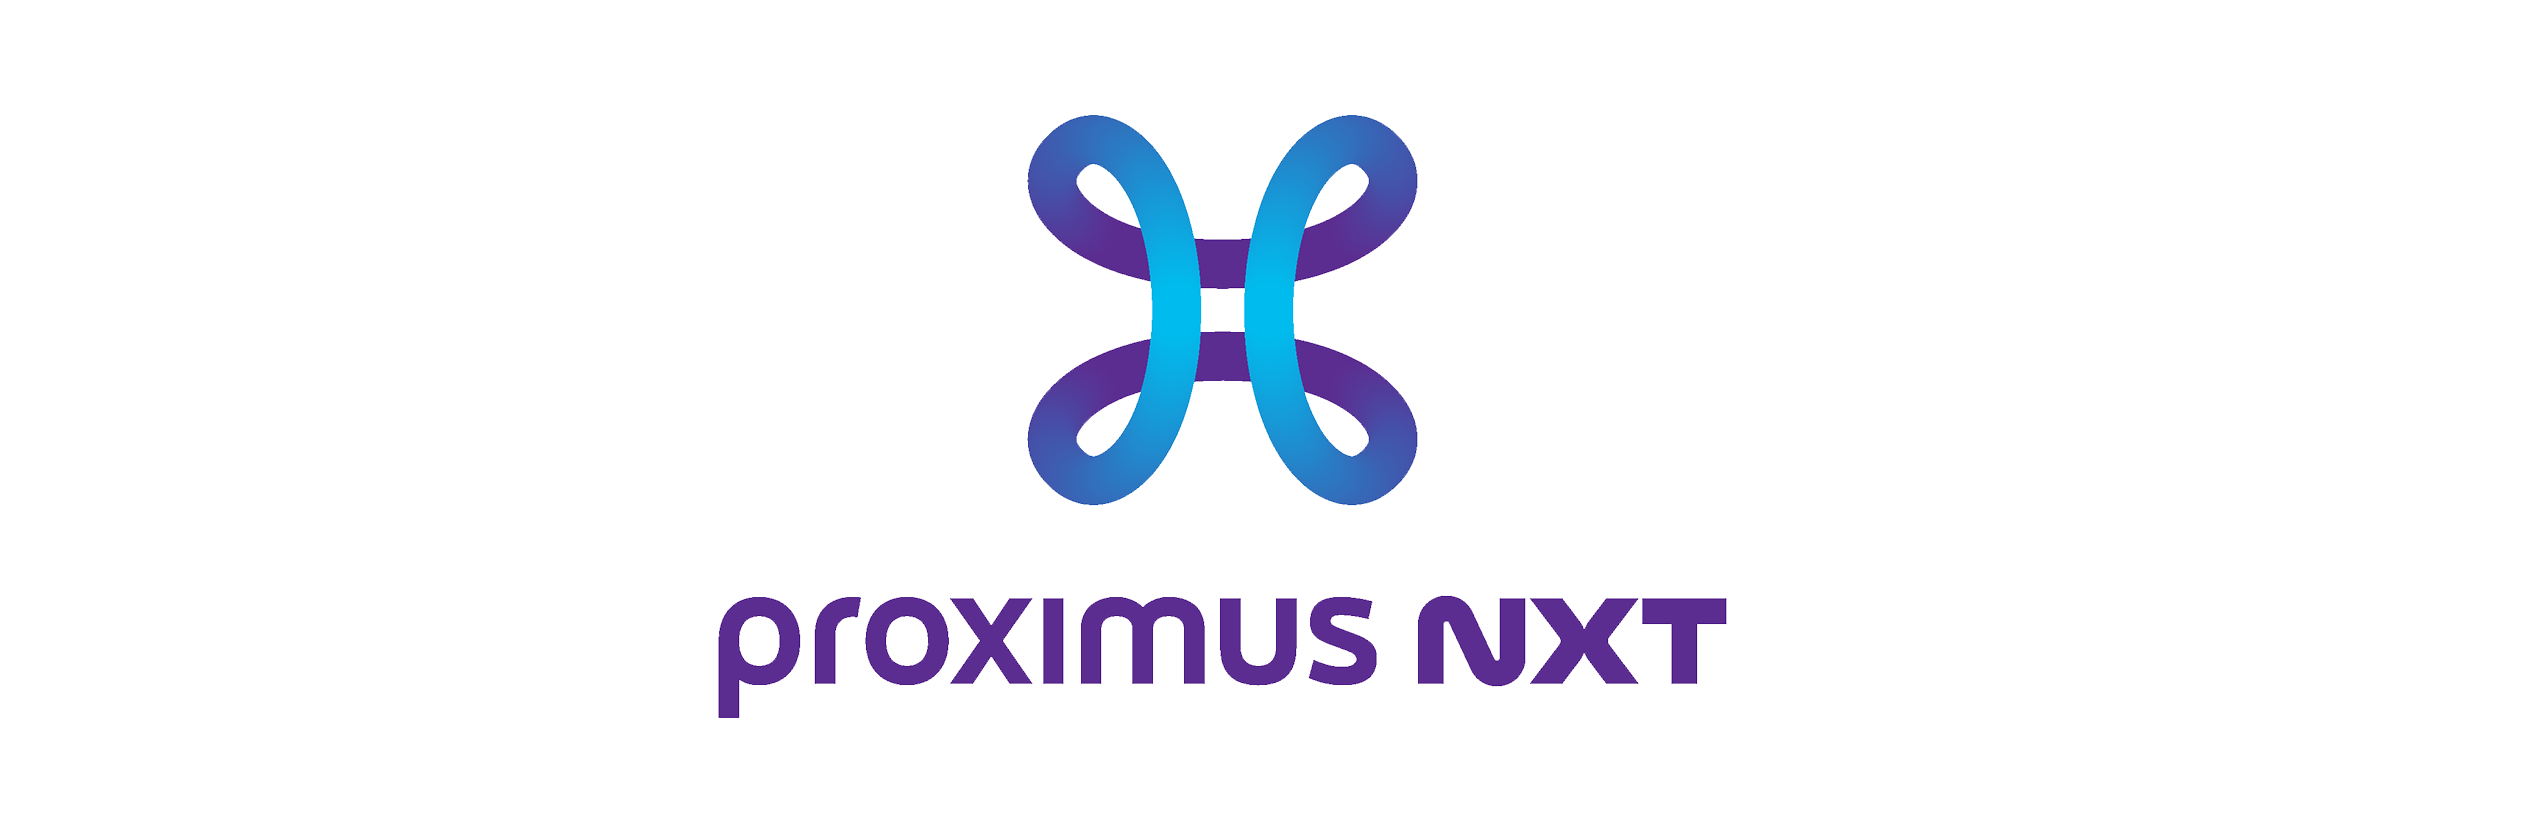 Proximus NXT logo